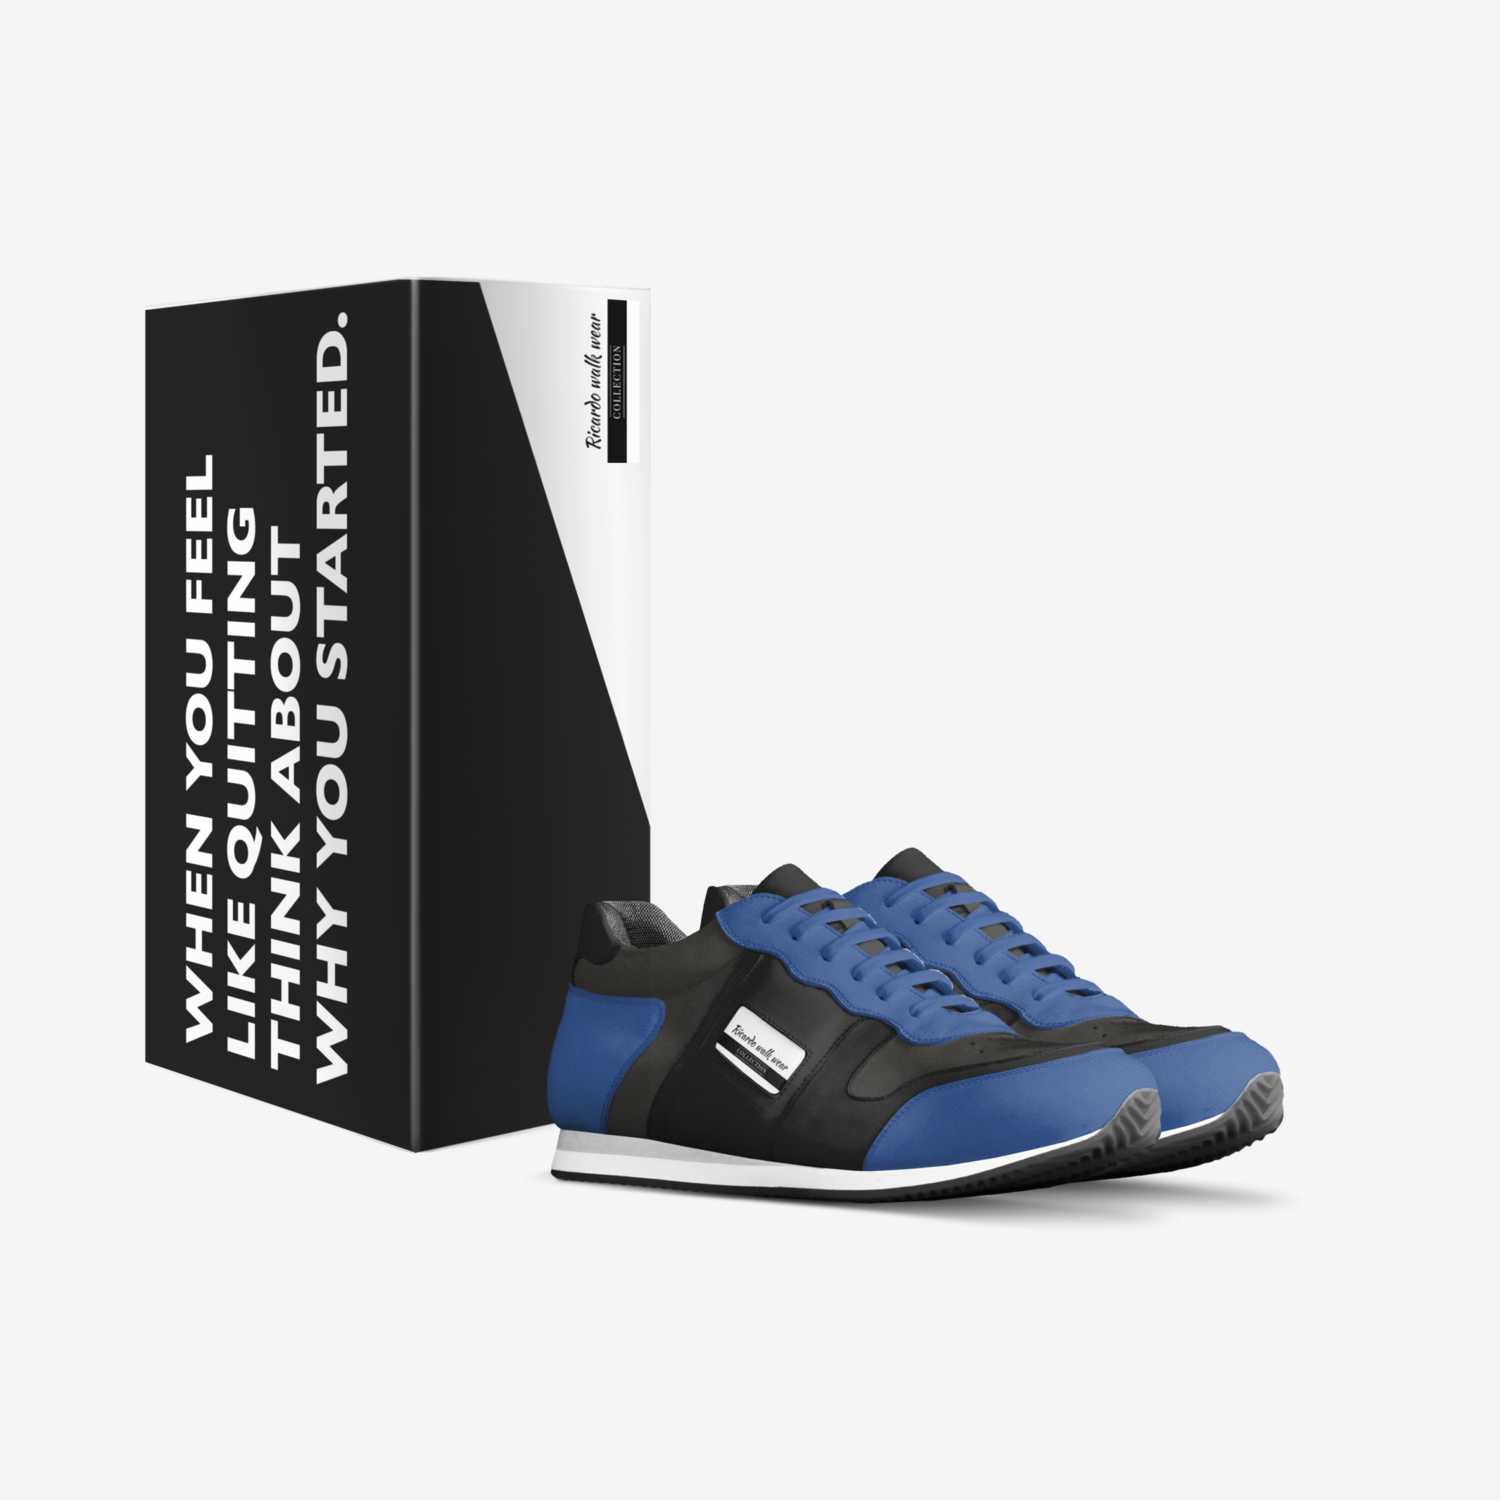 Ricardo walk wear  custom made in Italy shoes by Ricardo D Richardson | Box view